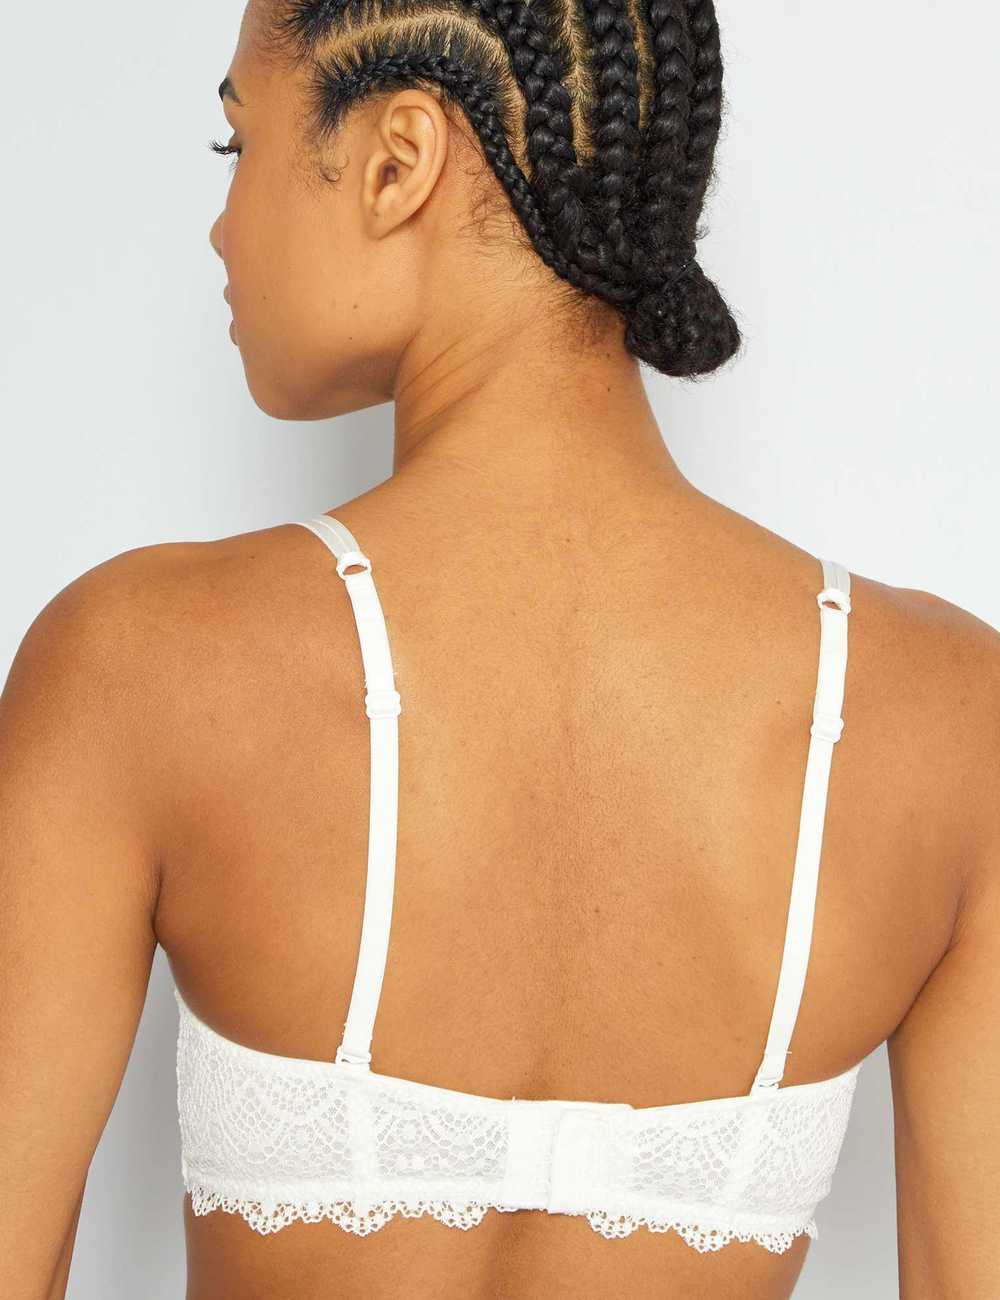 Buy Padded lace bra Online in Dubai & the UAE